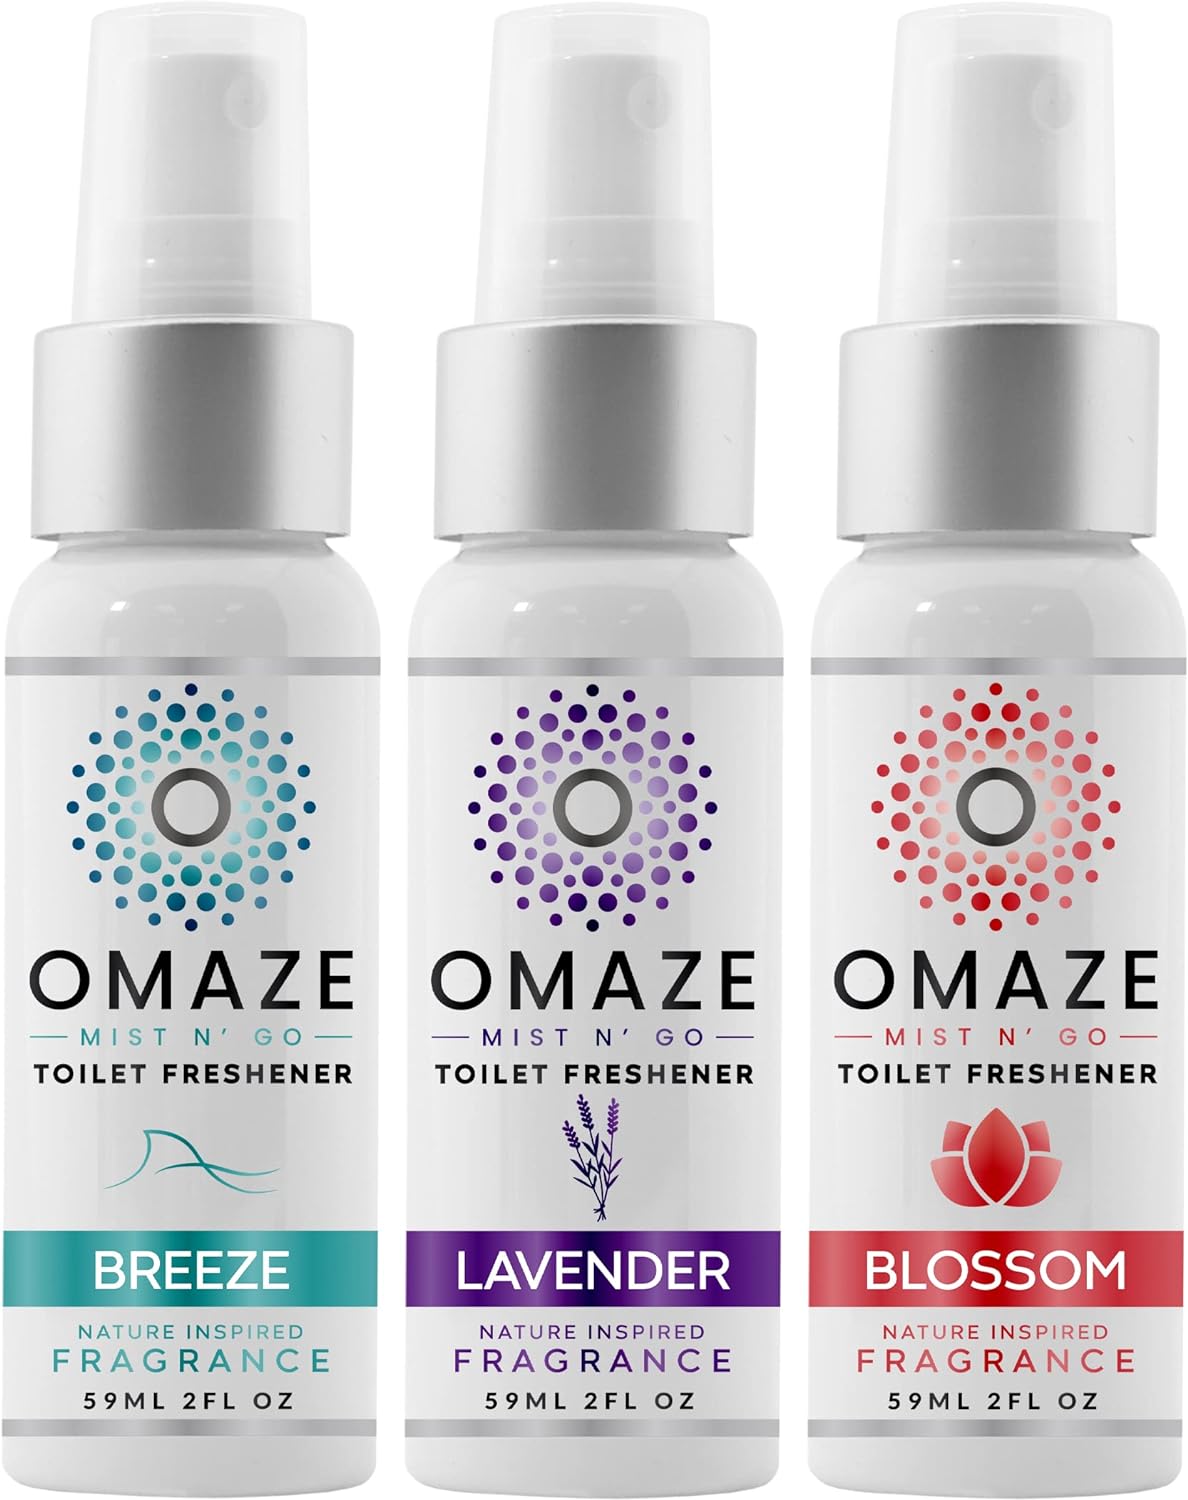 Mist N Go Toilet Freshener | Breeze, Lavender, Blossom Scent 2 Fl Oz | Odor Neutralizer for Toilets